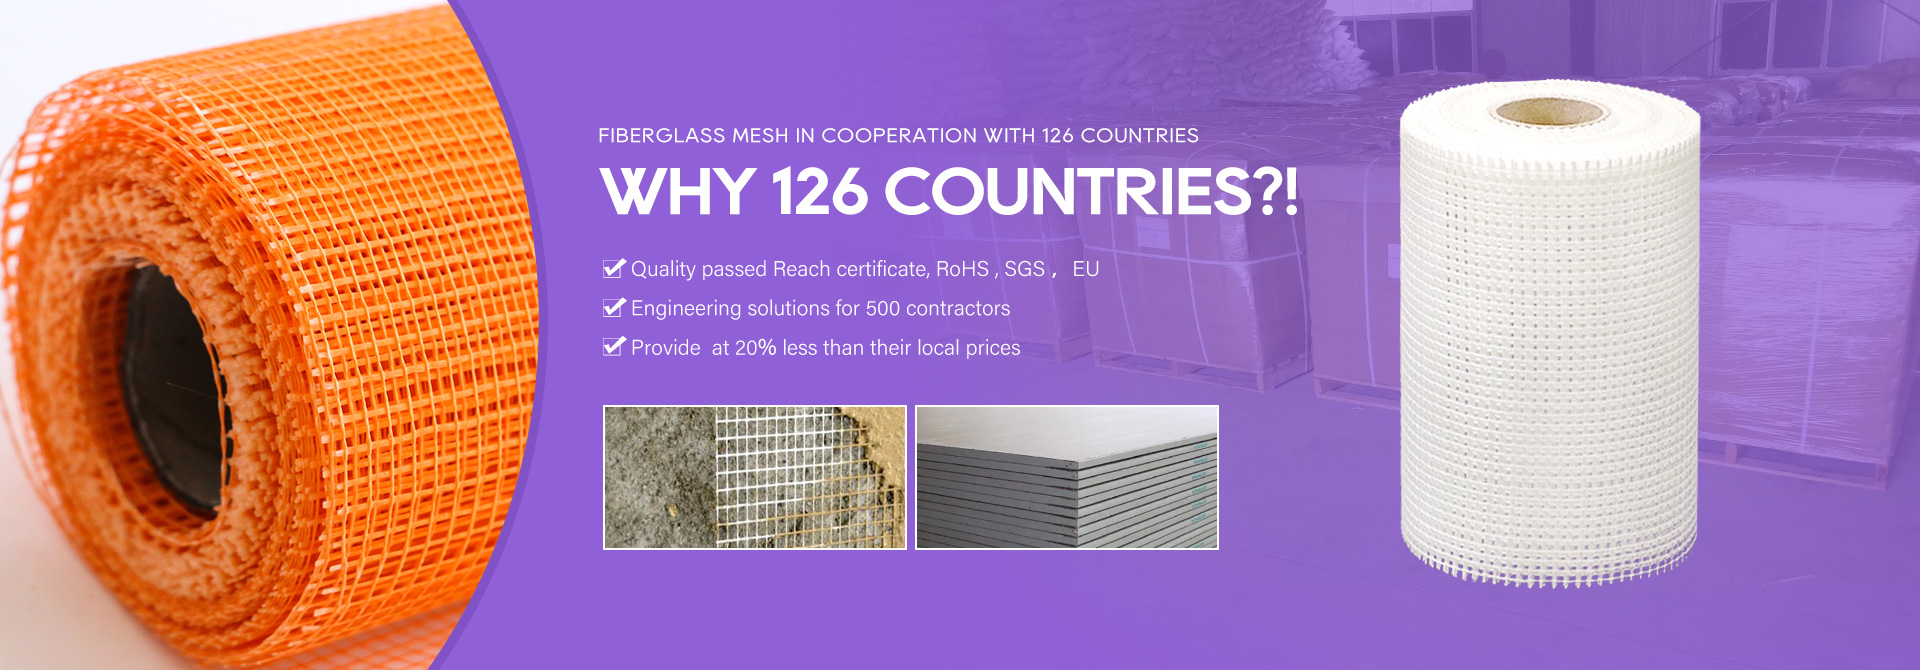 Fiberglass mesh in cooperation with 126 countries-HD Fiberglass